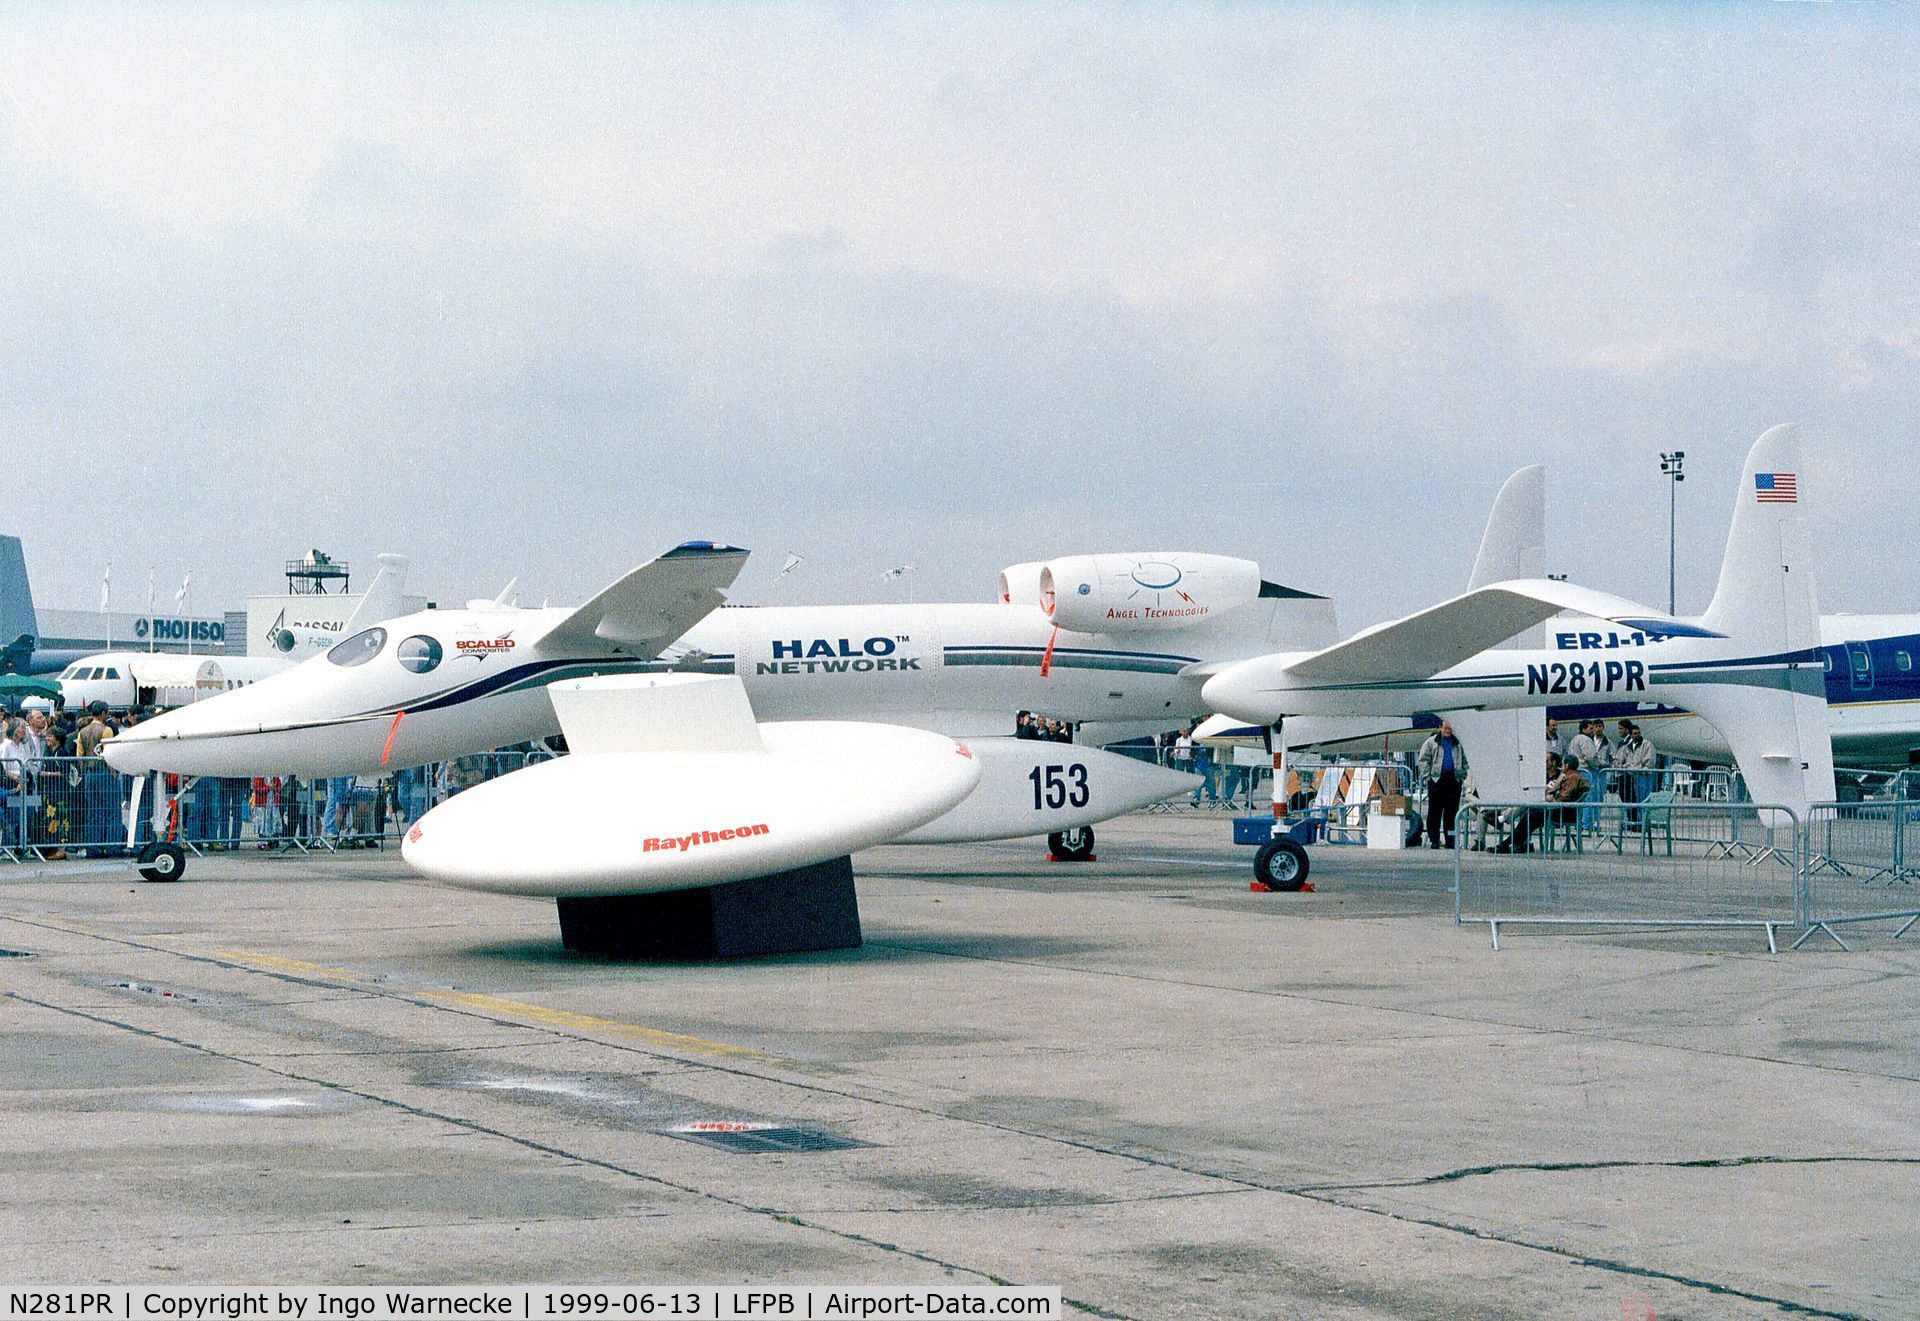 N281PR, 1998 Scaled Composites 281 C/N 001, Scaled Composites (Rutan) 281 Proteus at the Aerosalon 1999, Paris